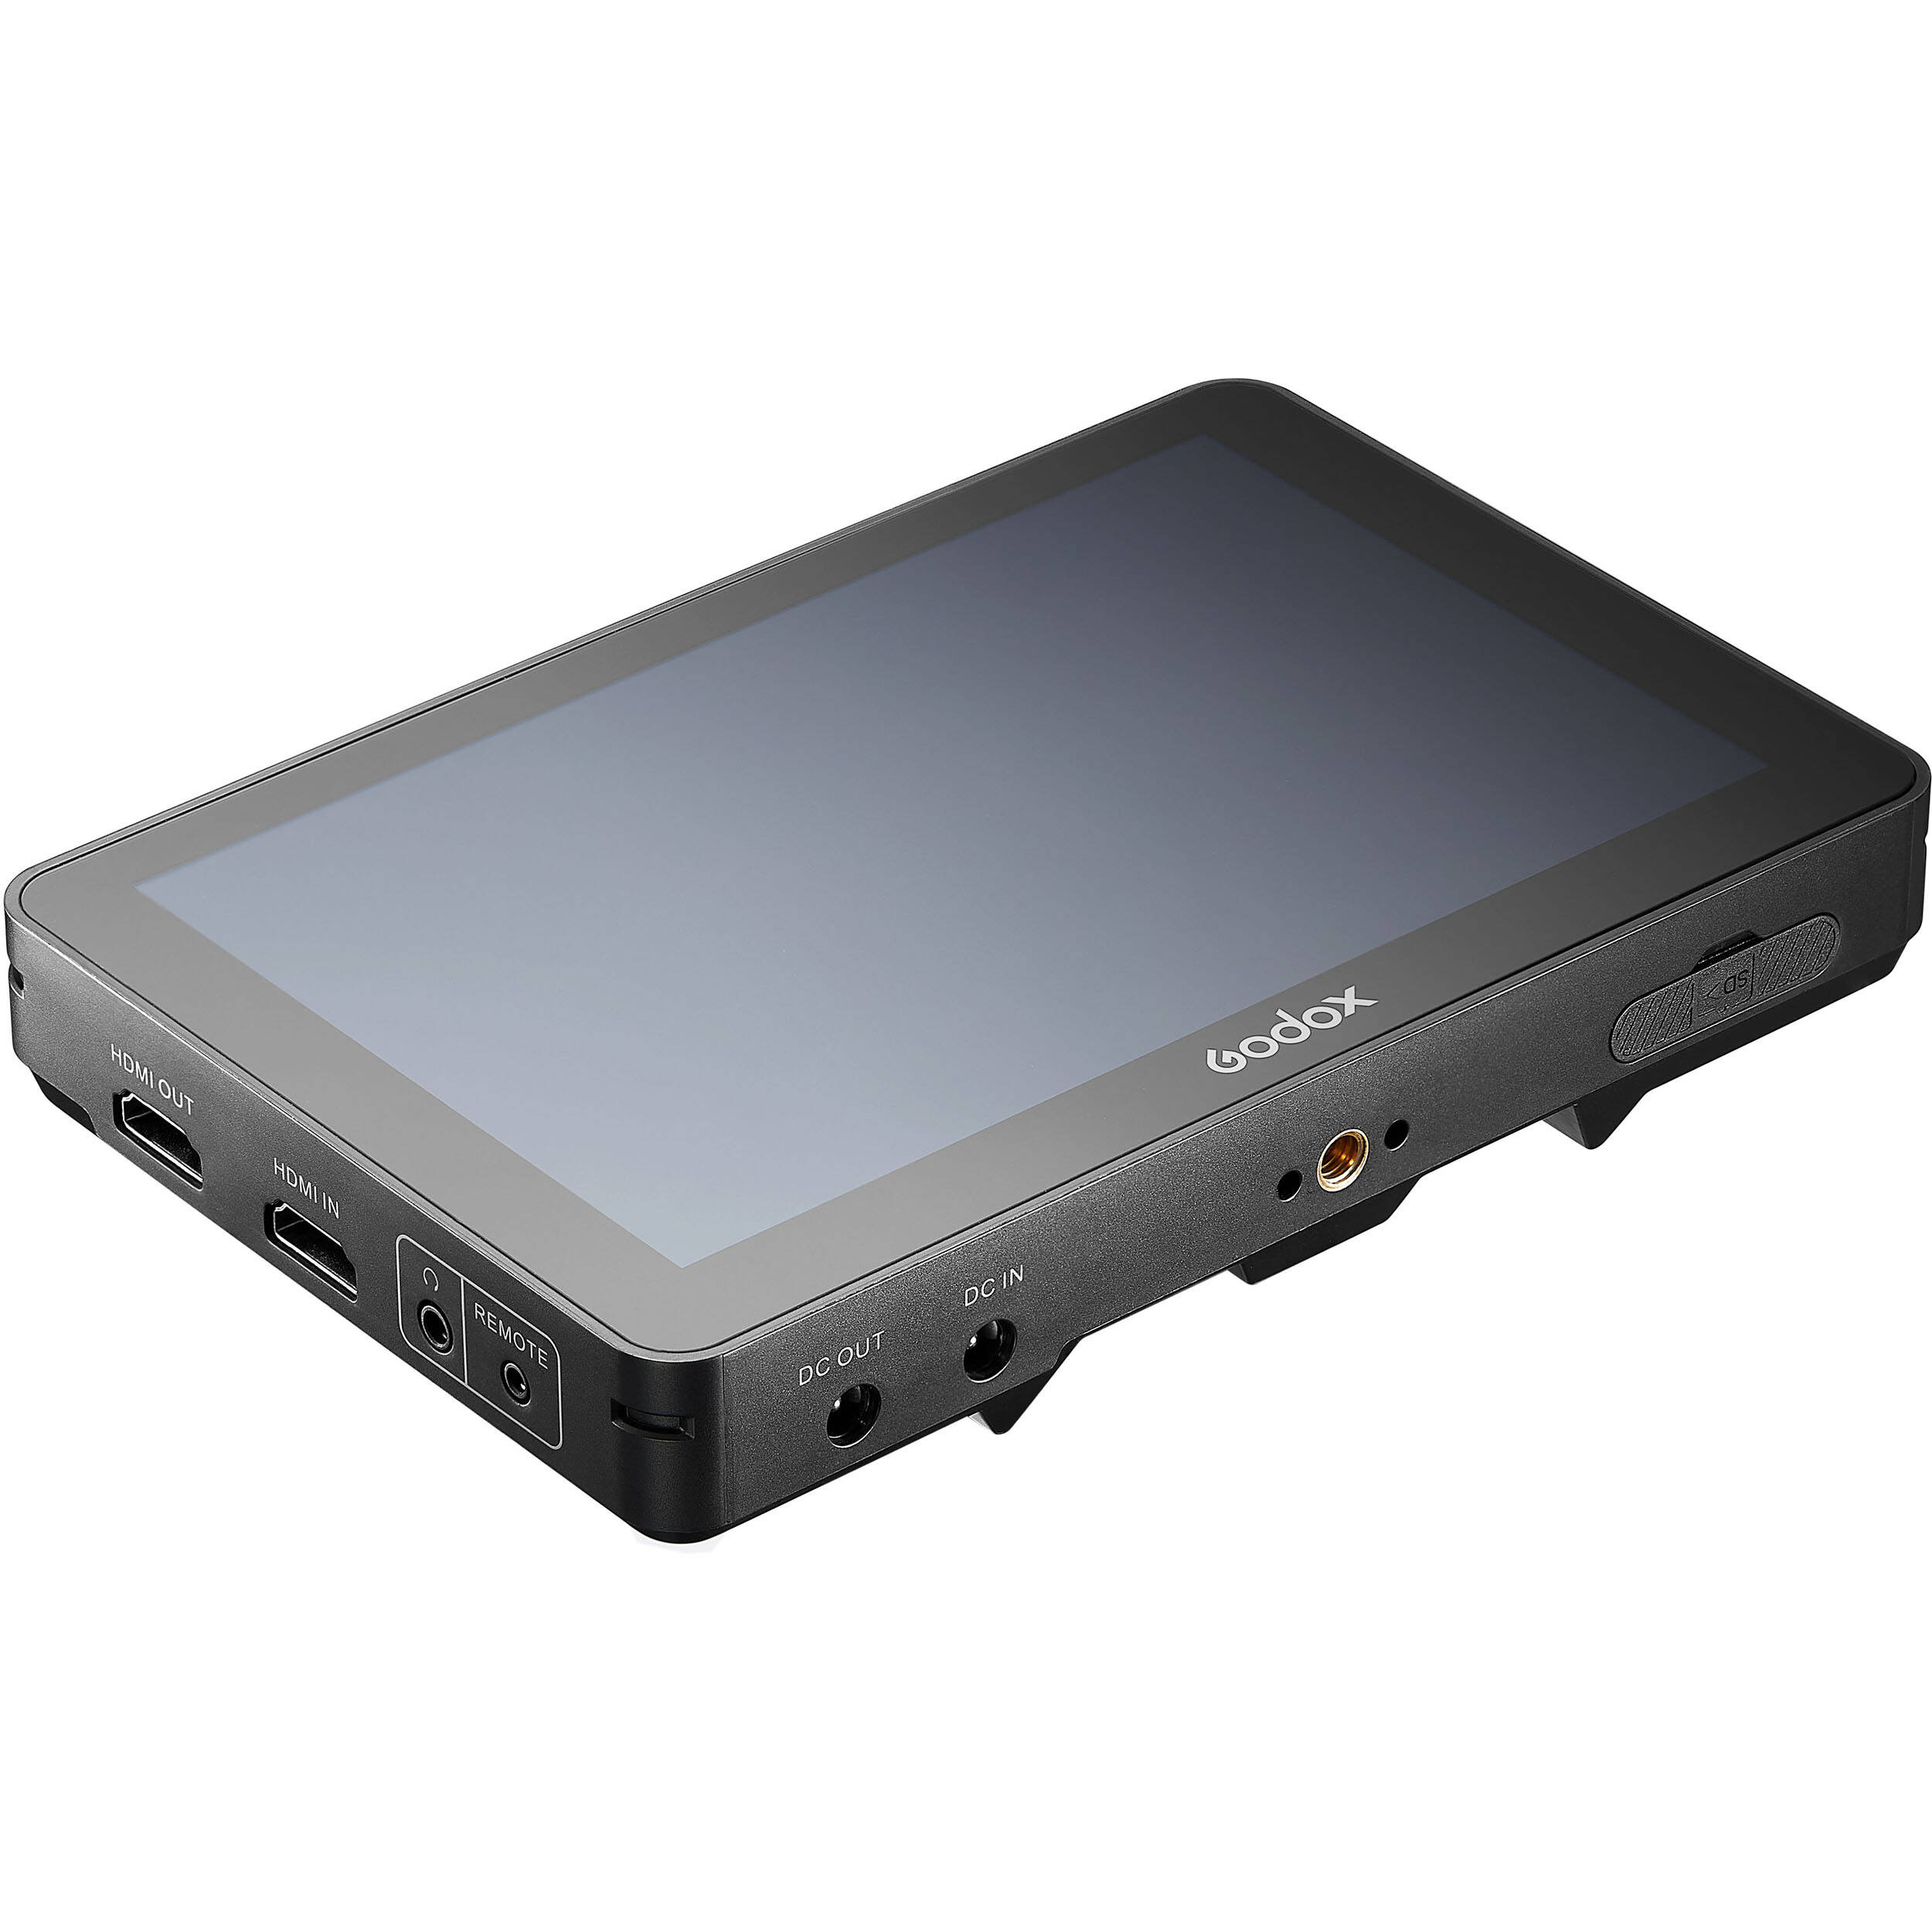   Godox GM7S 74K HDMI    Ultra-mart